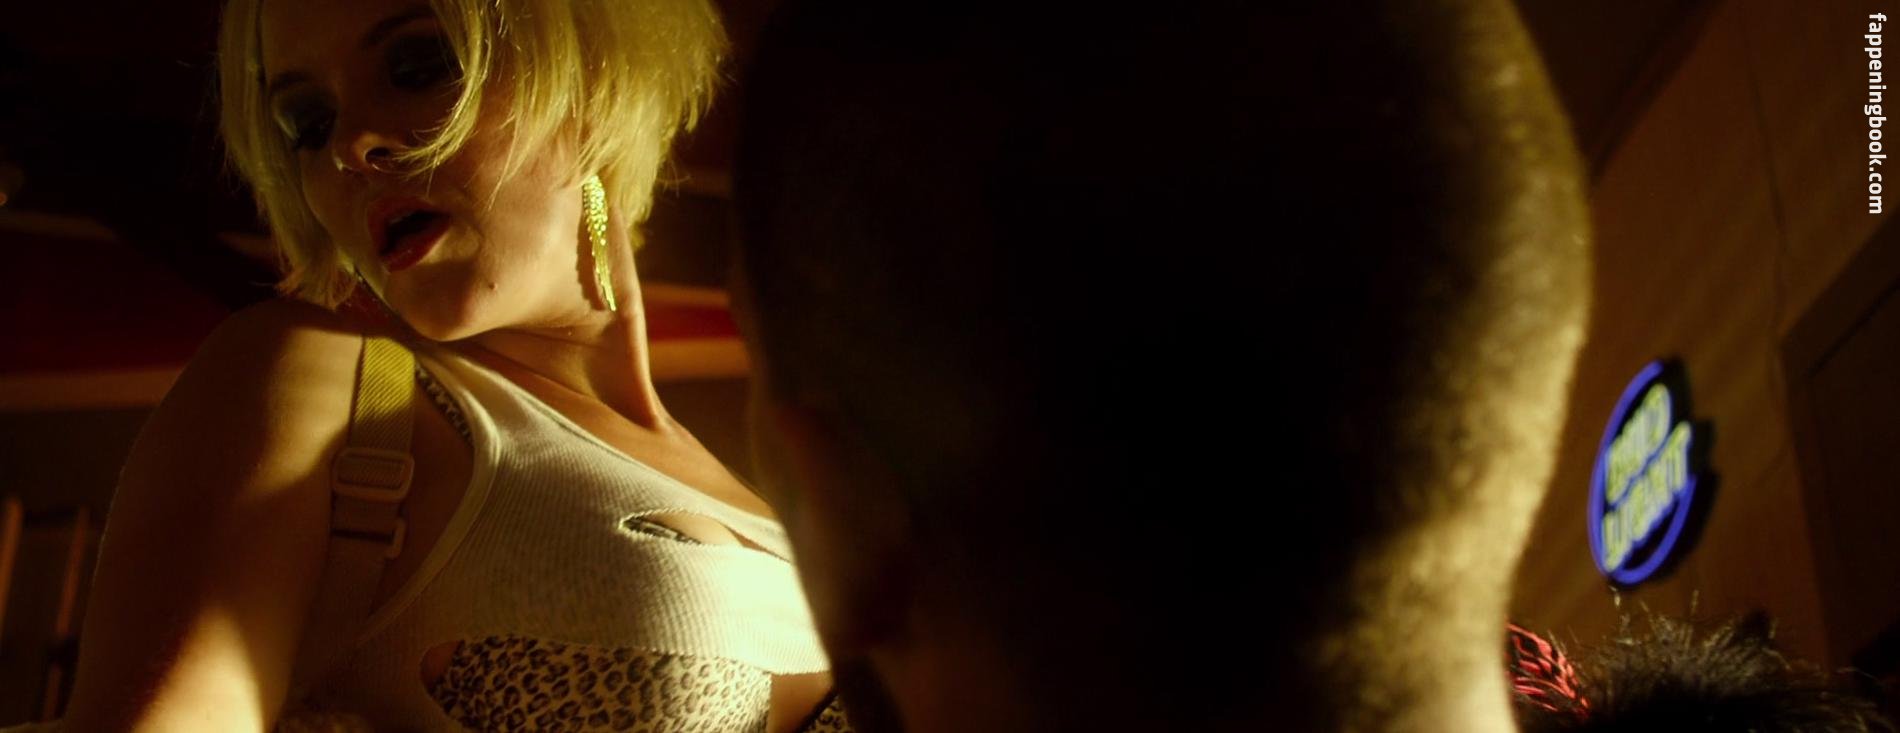 Brea Grant Nude, The Fappening - Photo #84687 - FappeningBook.